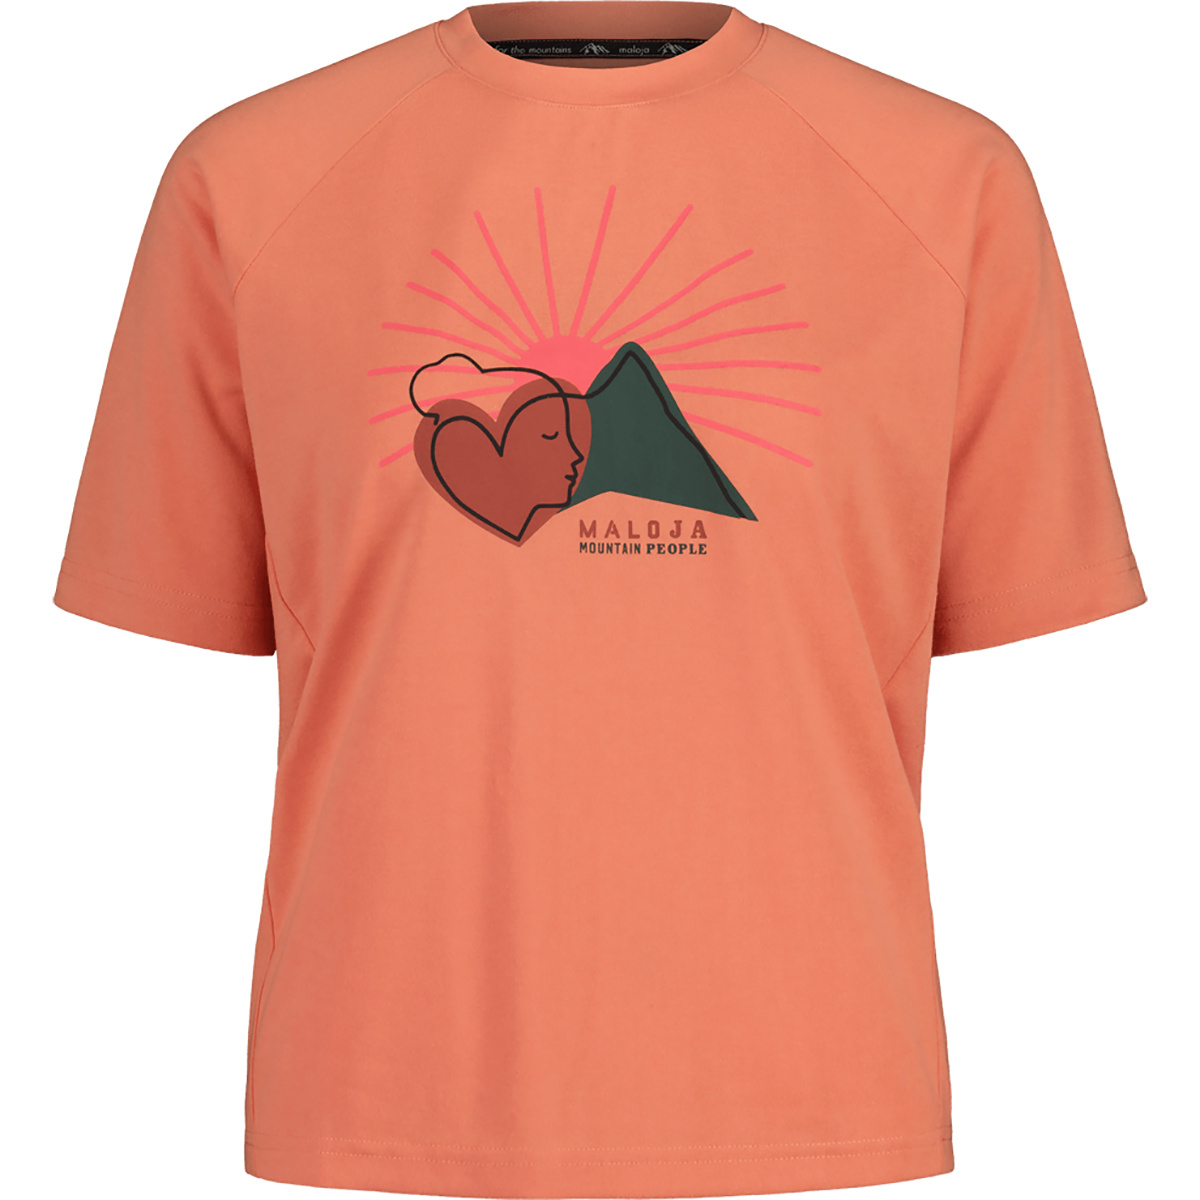 Maloja Damen DambelM. Mountain T-Shirt von Maloja